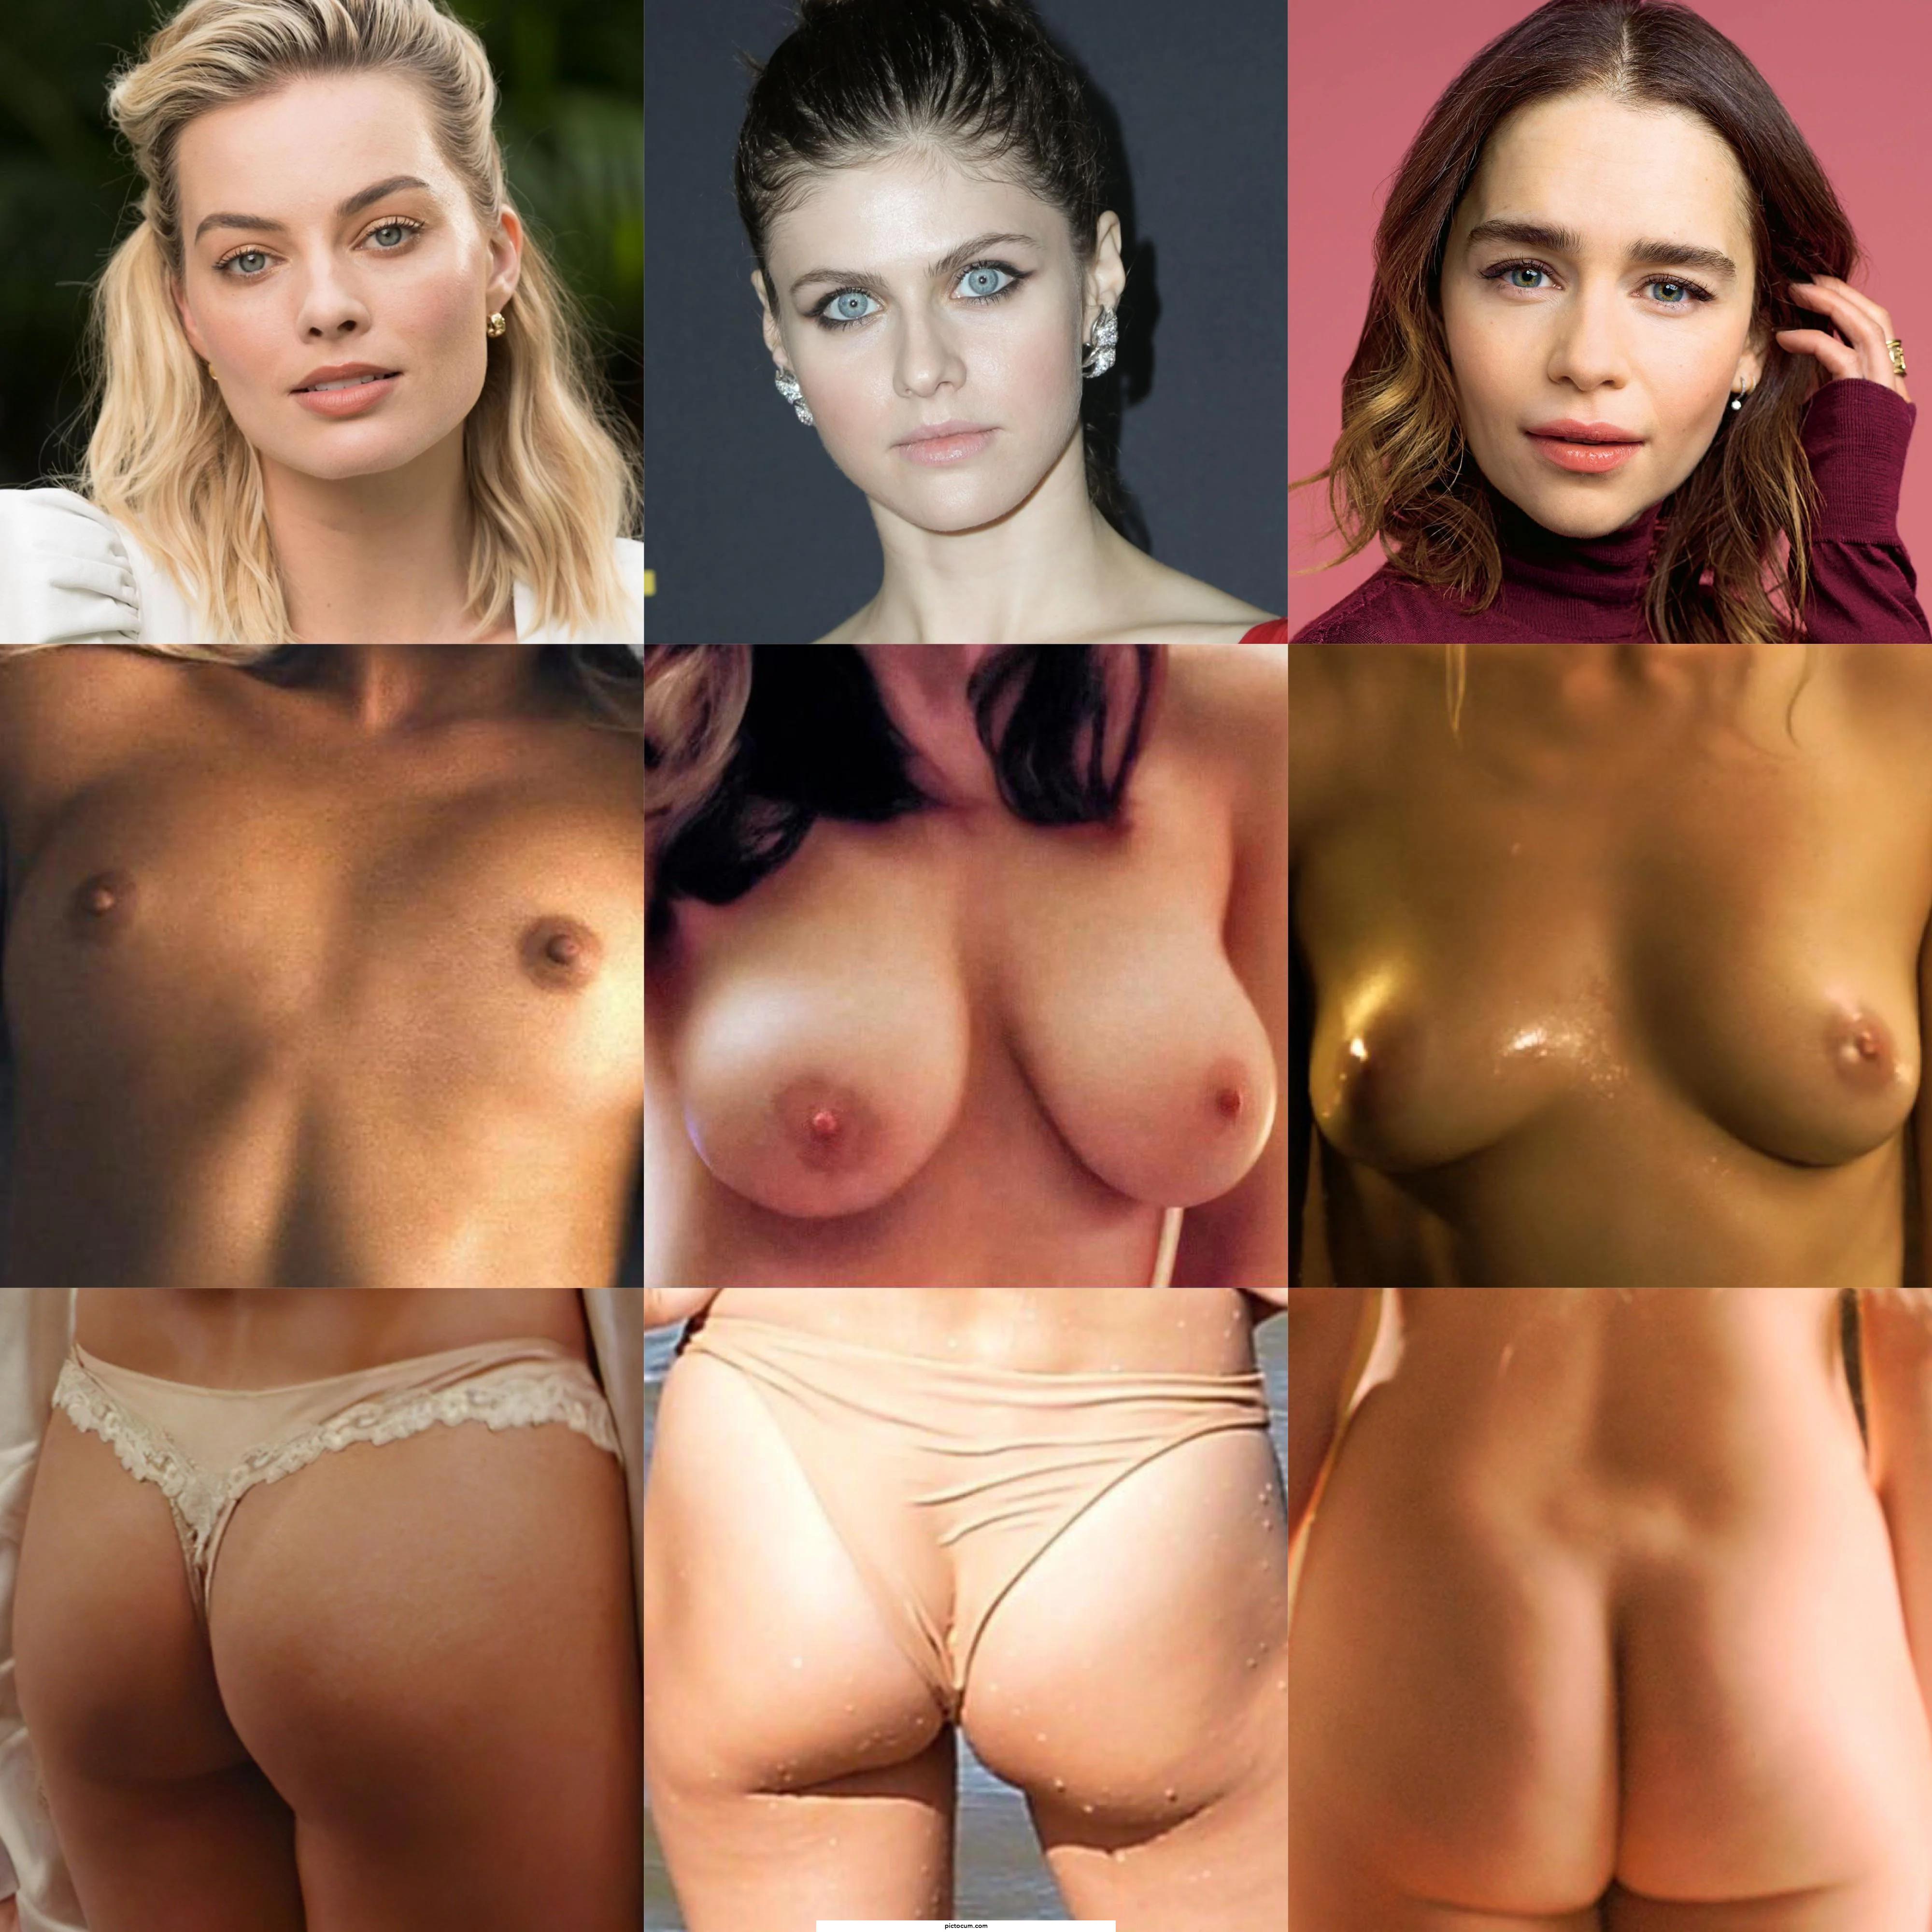 Who would be the best pornstar: Margot Robbie, Alexandra Daddario or Emilia Clarke?